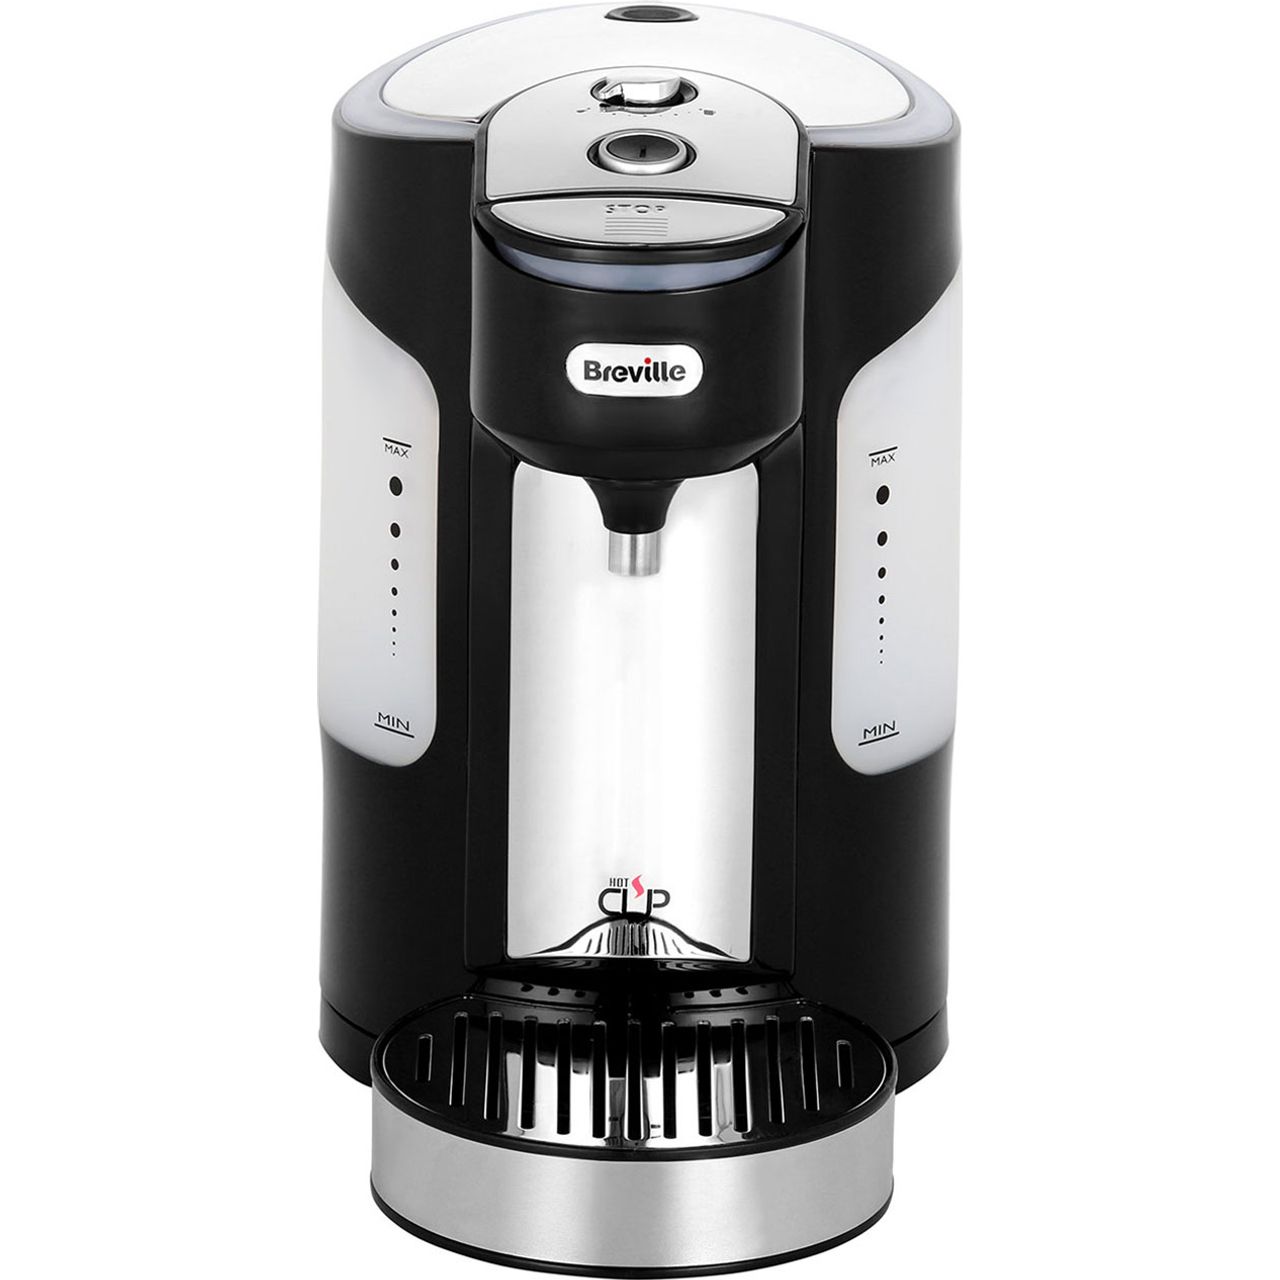 Breville Hot Cup VKJ318 Hot Water Dispenser Review